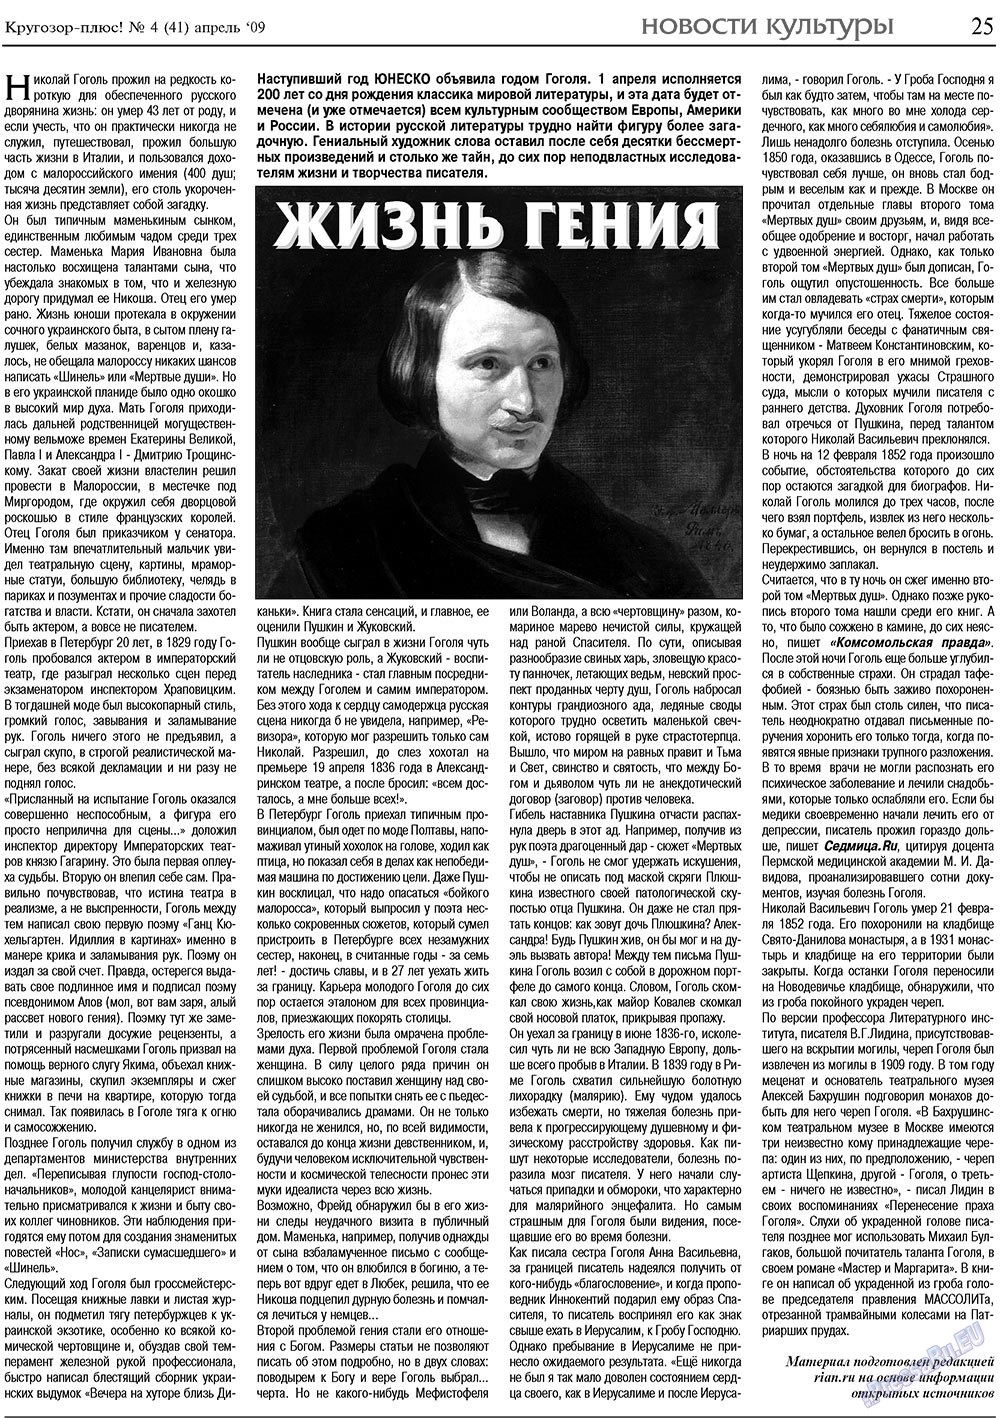 Кругозор плюс! (газета). 2009 год, номер 4, стр. 25